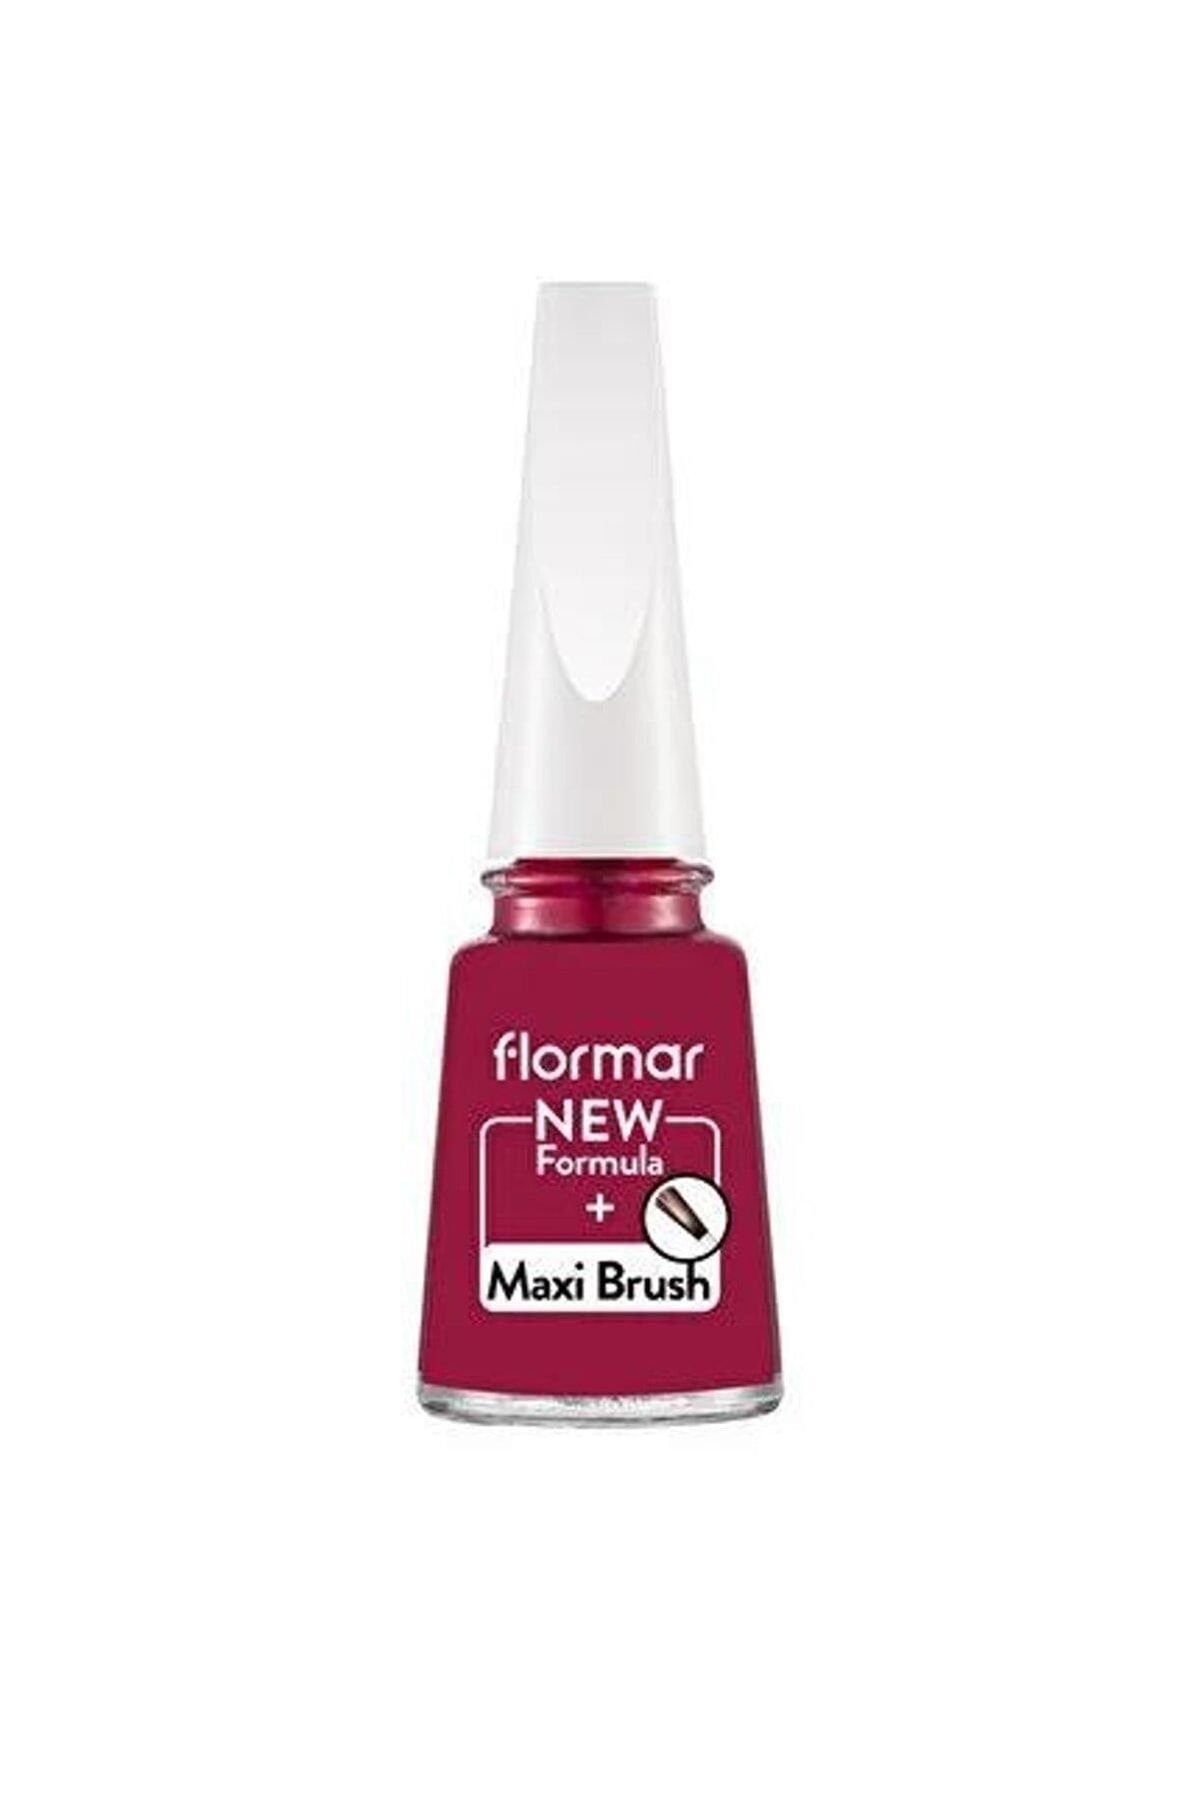 Flormar رنگ ناخن ماکسی براش 075 باروک بوردو